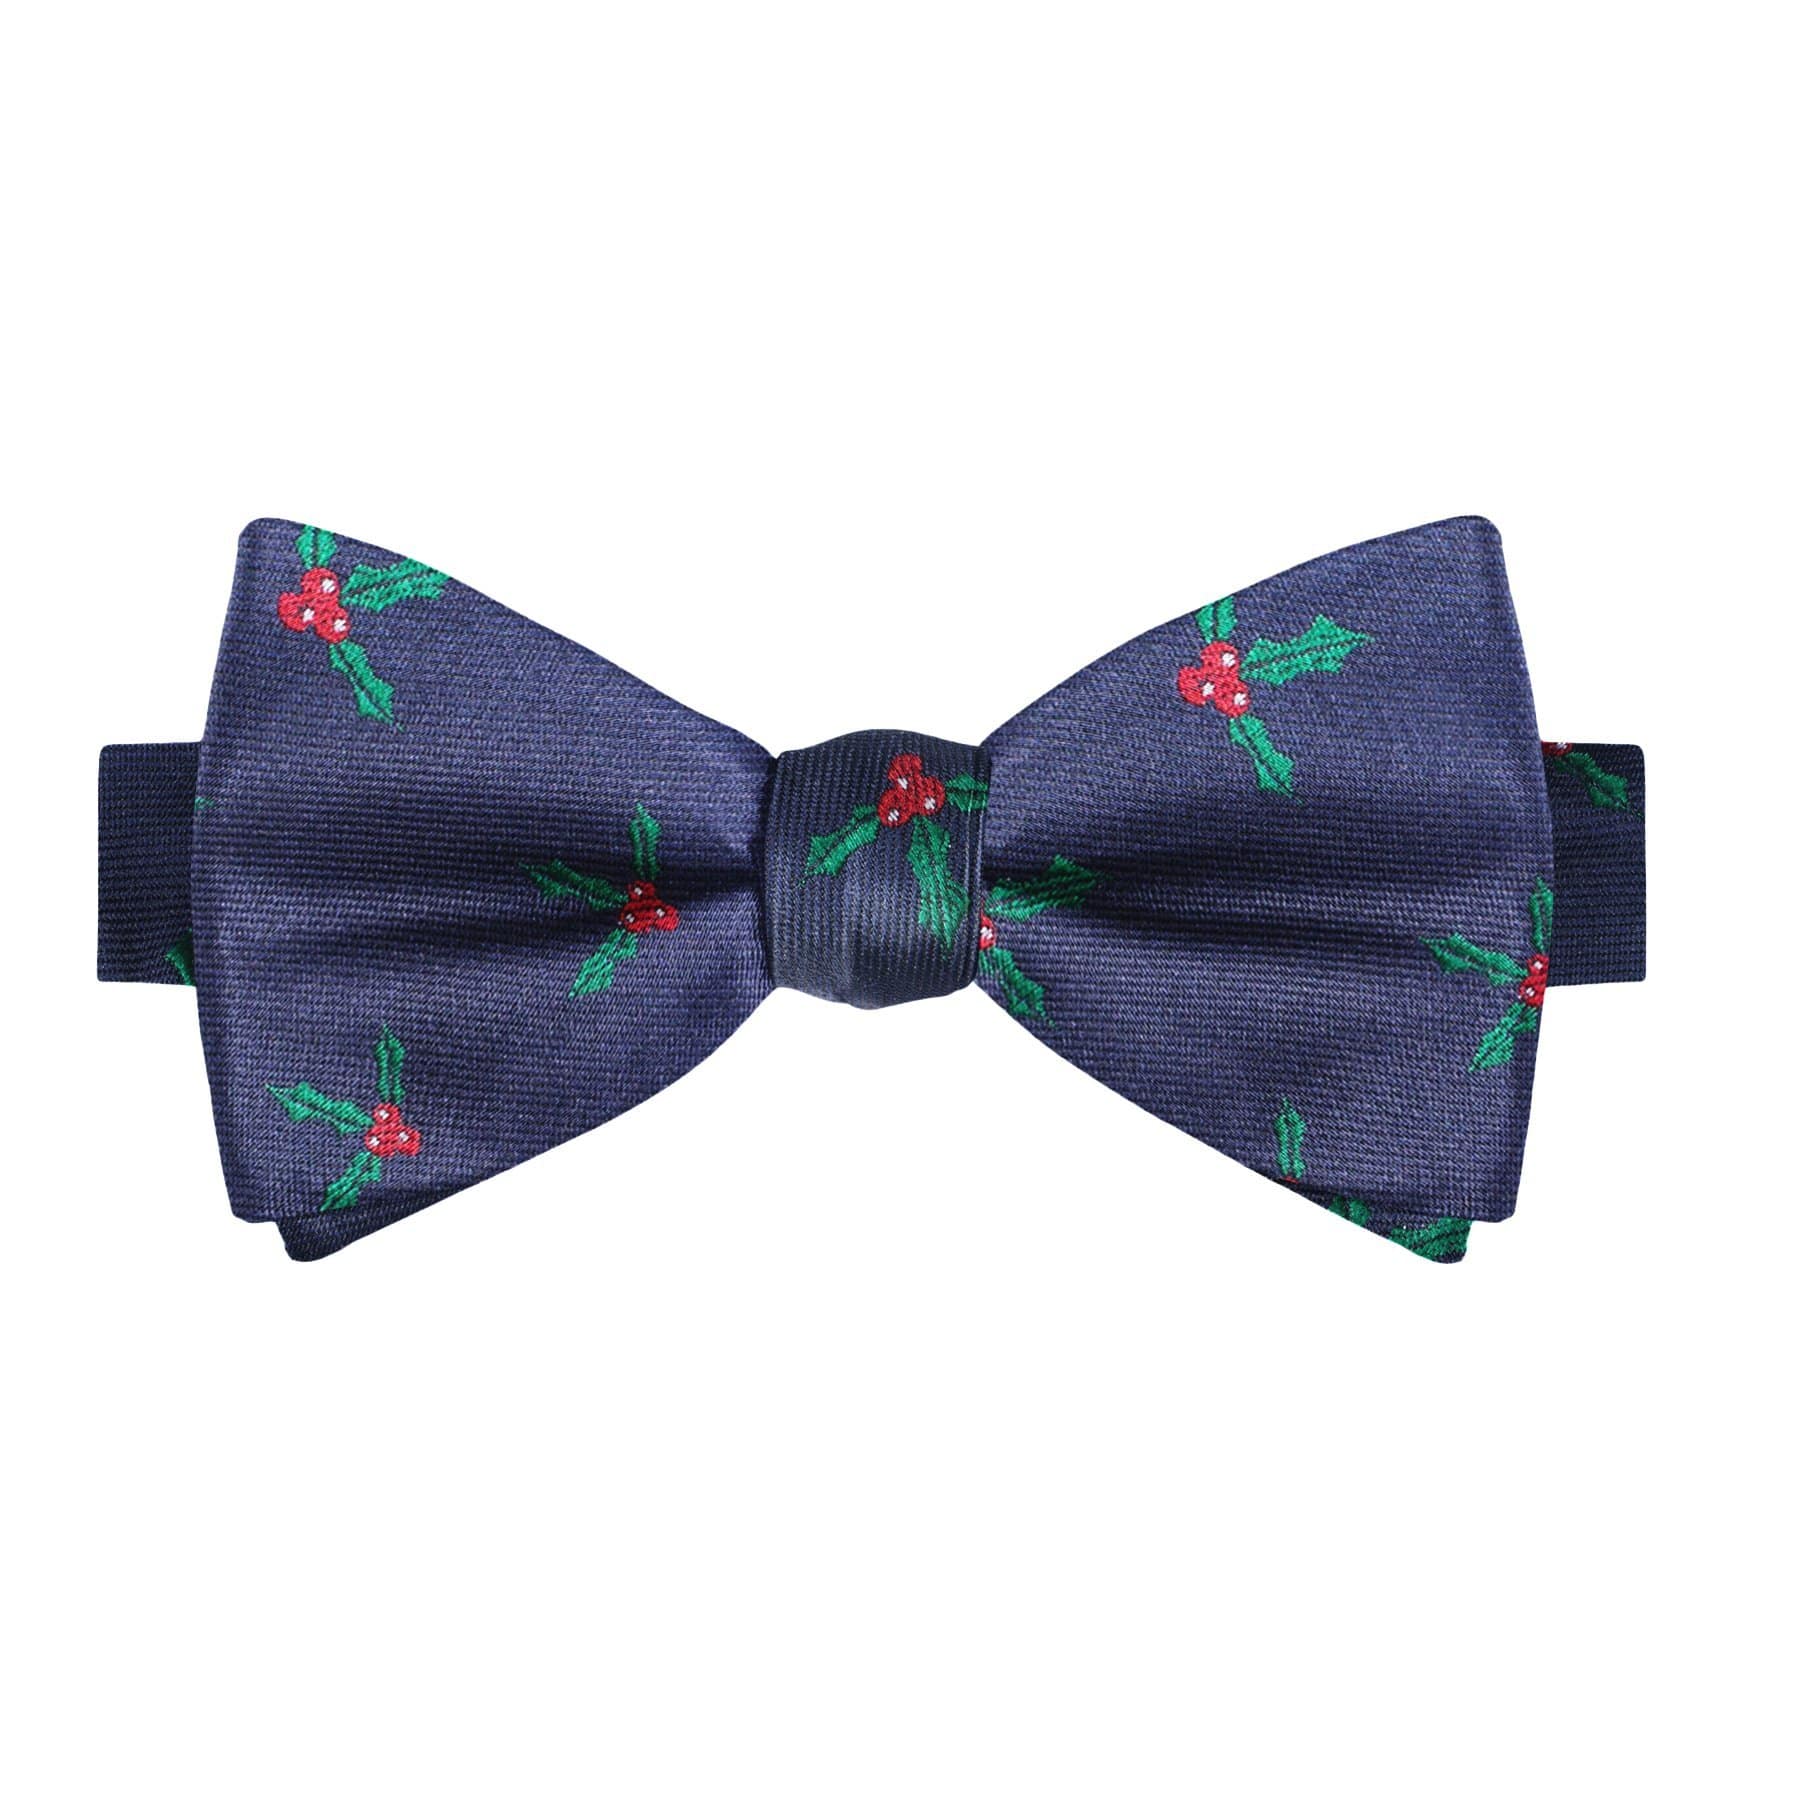 Alfred Christmas Bow Tie - Tie, bowtie, pocket square  | Kissties